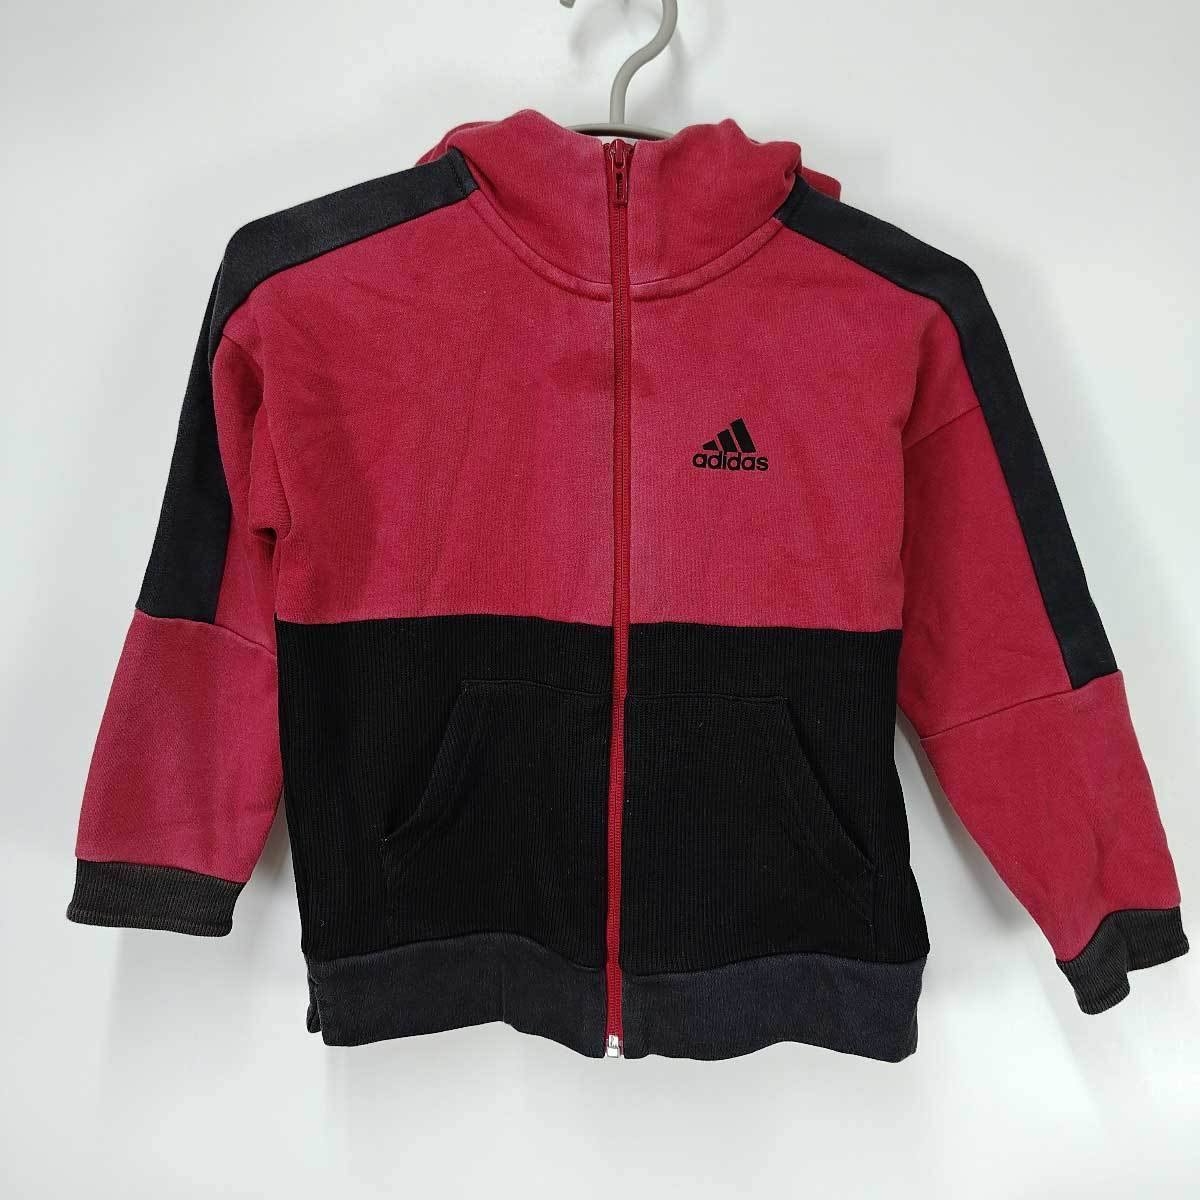 [ used ][4 point set ] Adidas Zip jersey jacket tops Under Armor cap 120-140 Kids Junior 